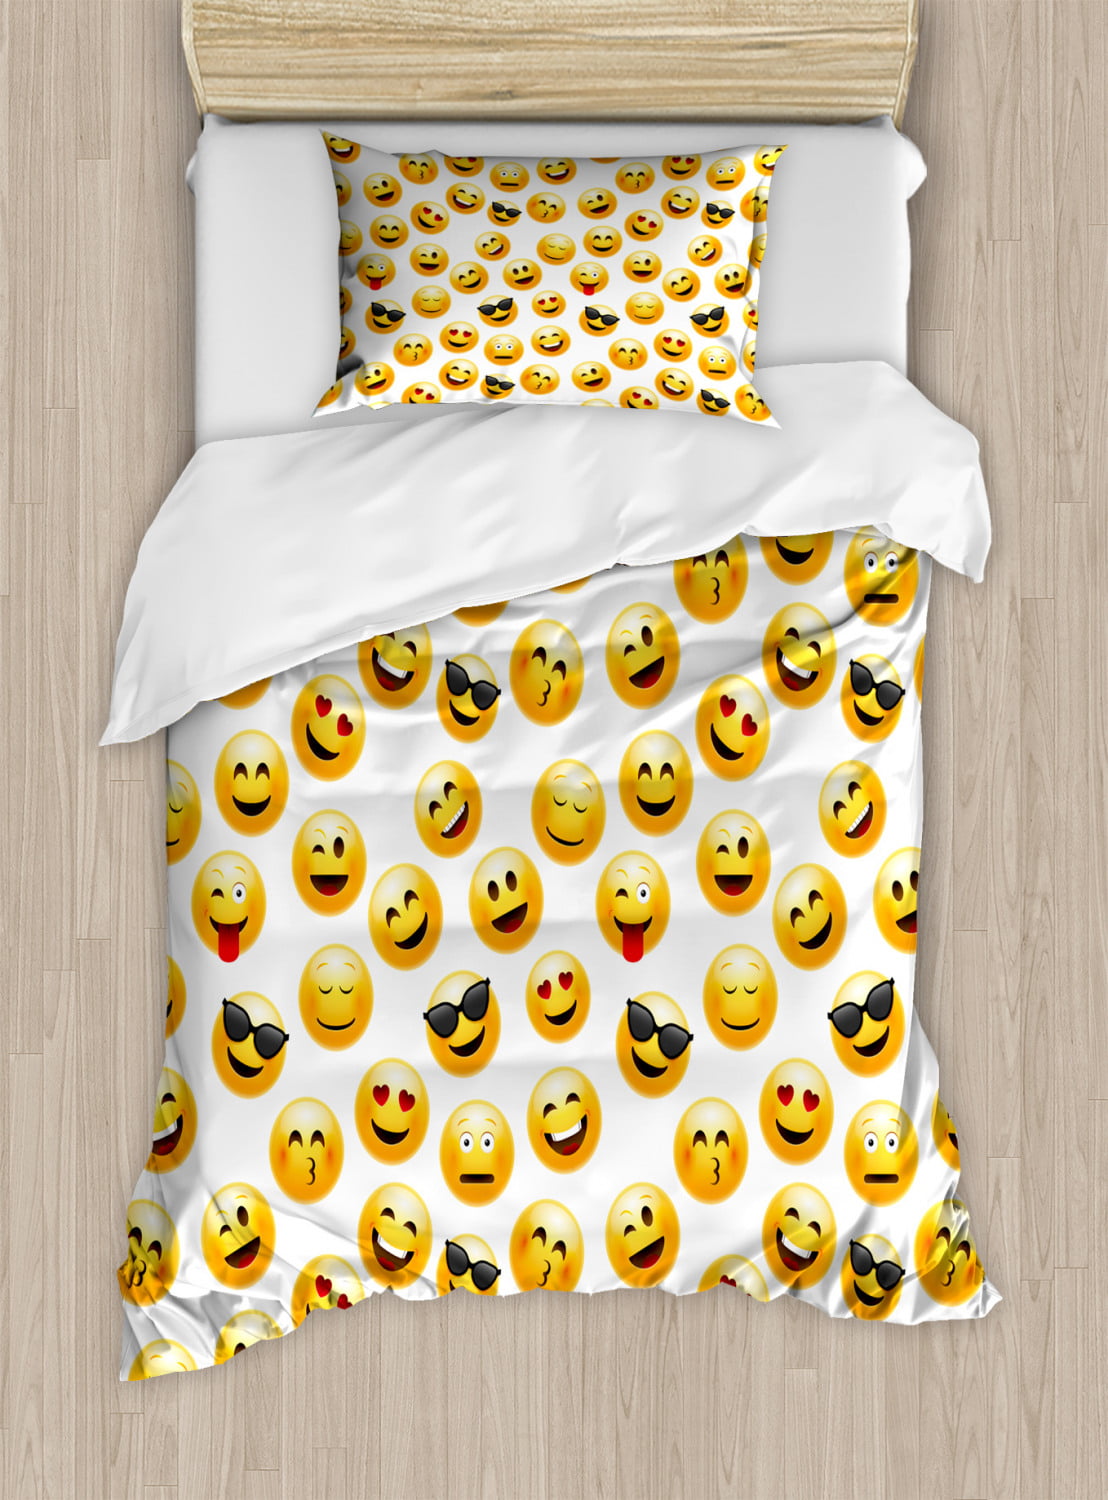 Emotions Black Emoji Emoticon Sleepy Sad Smiley Red Yellow Bedding Or Curtains 